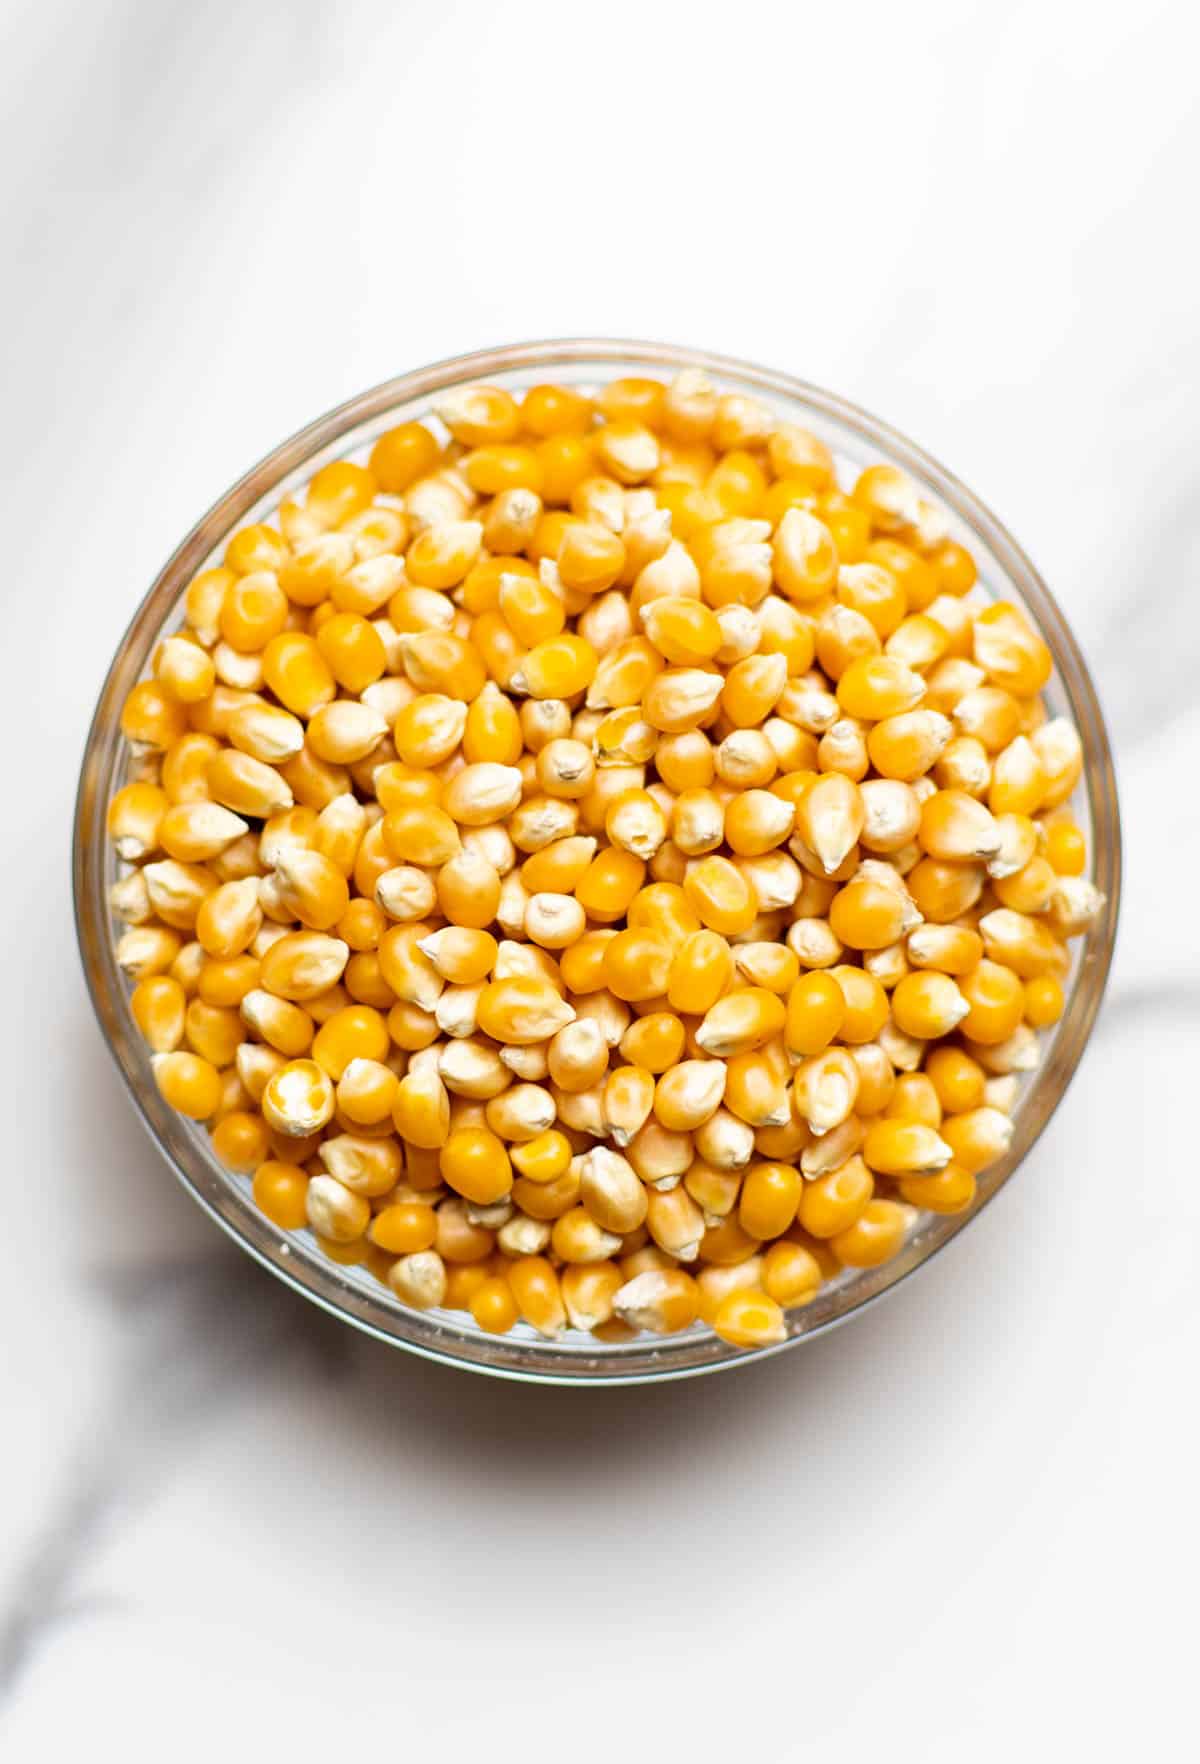 overlay shot of popcorn kernels in a glass bowl